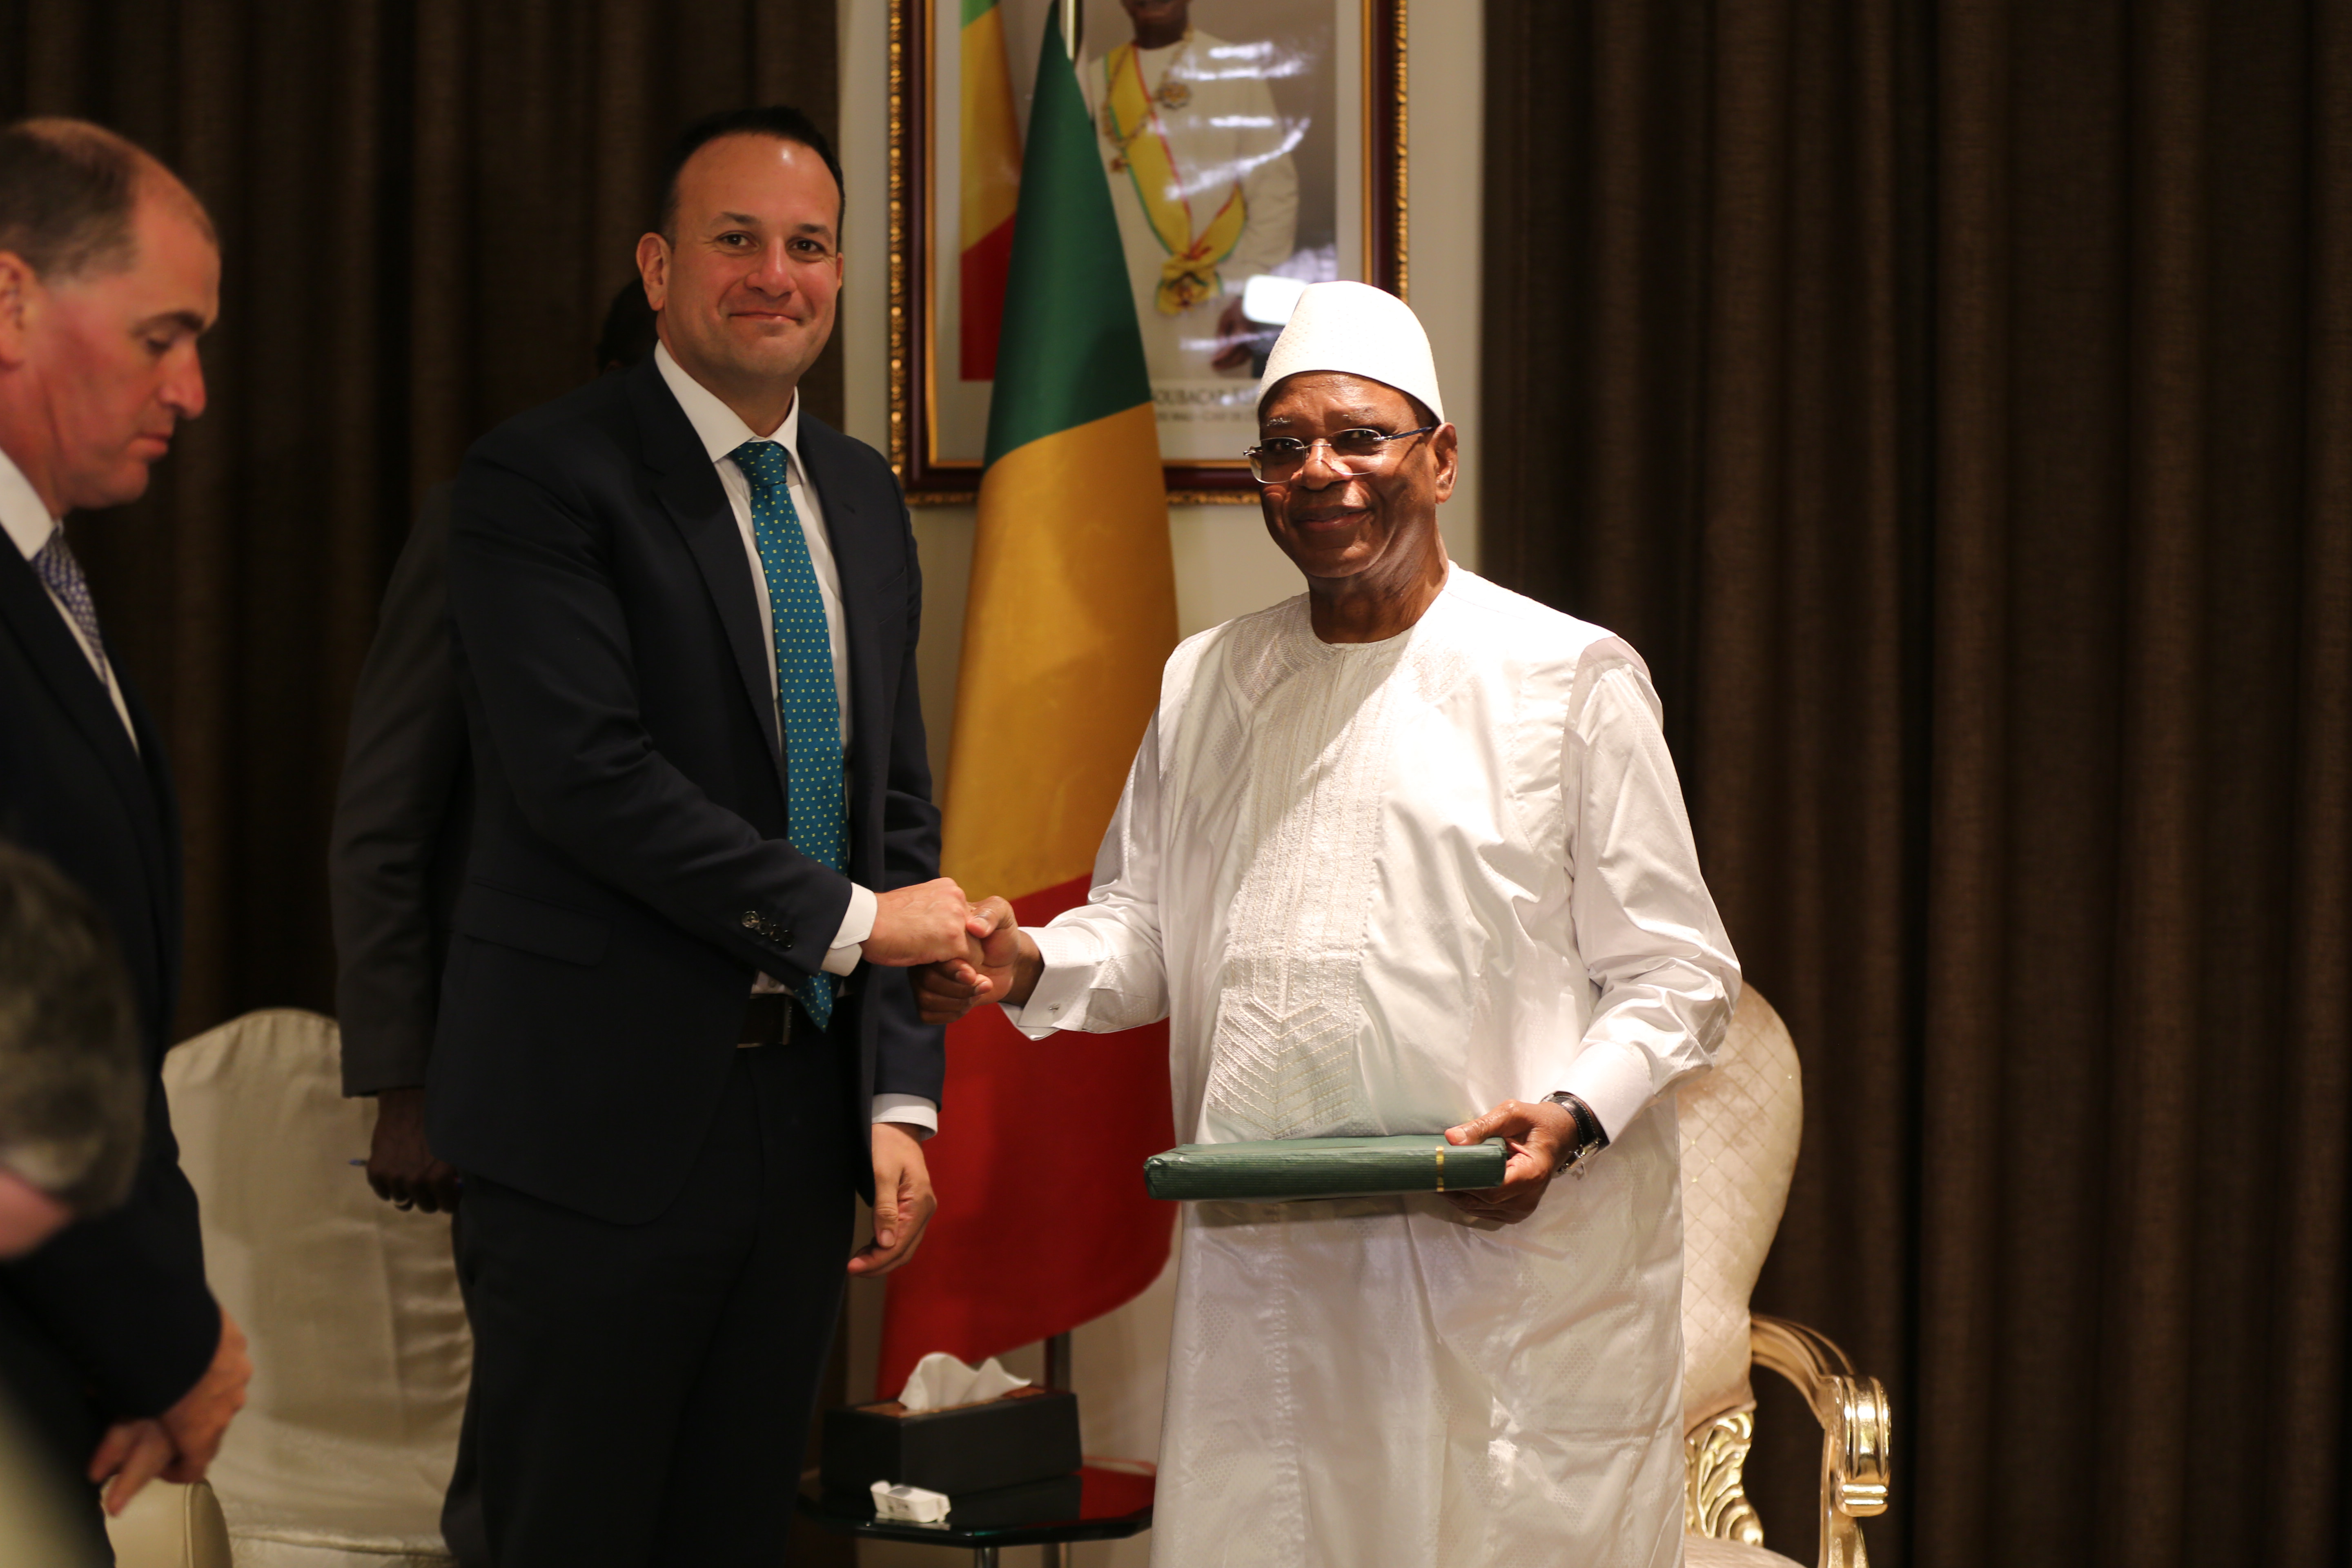 An Taoiseach meeting the President of Mali